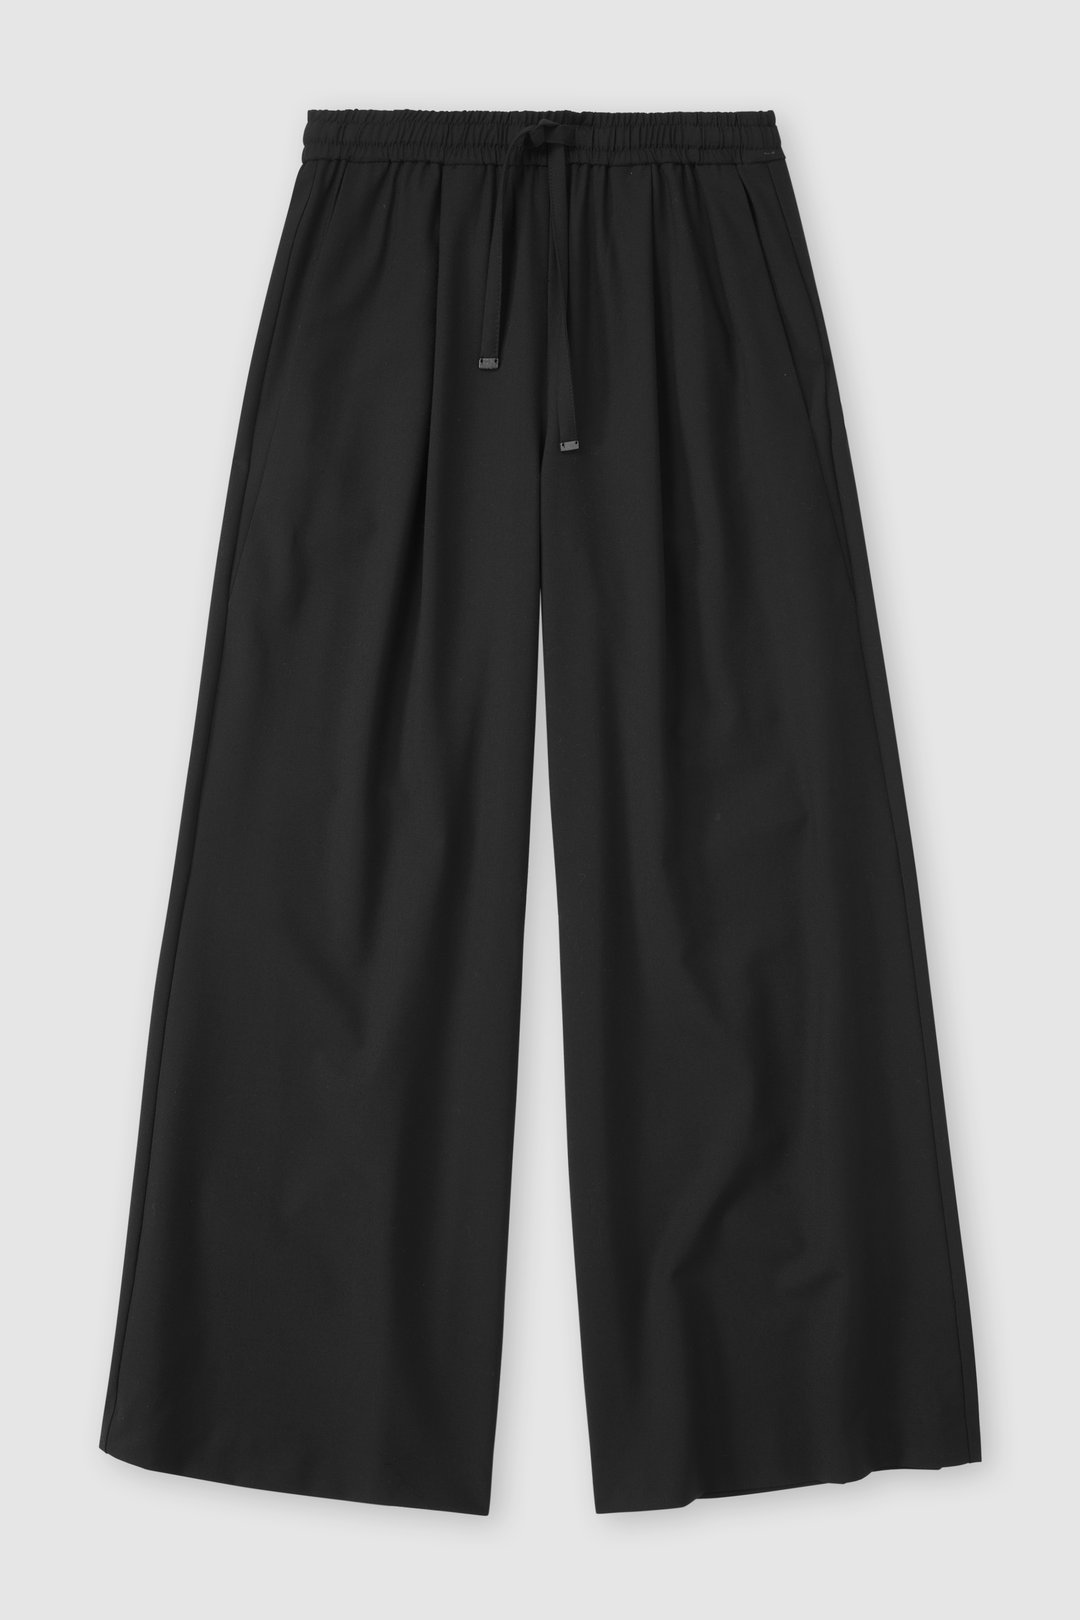 Dawn Button Slack Trousers - Black